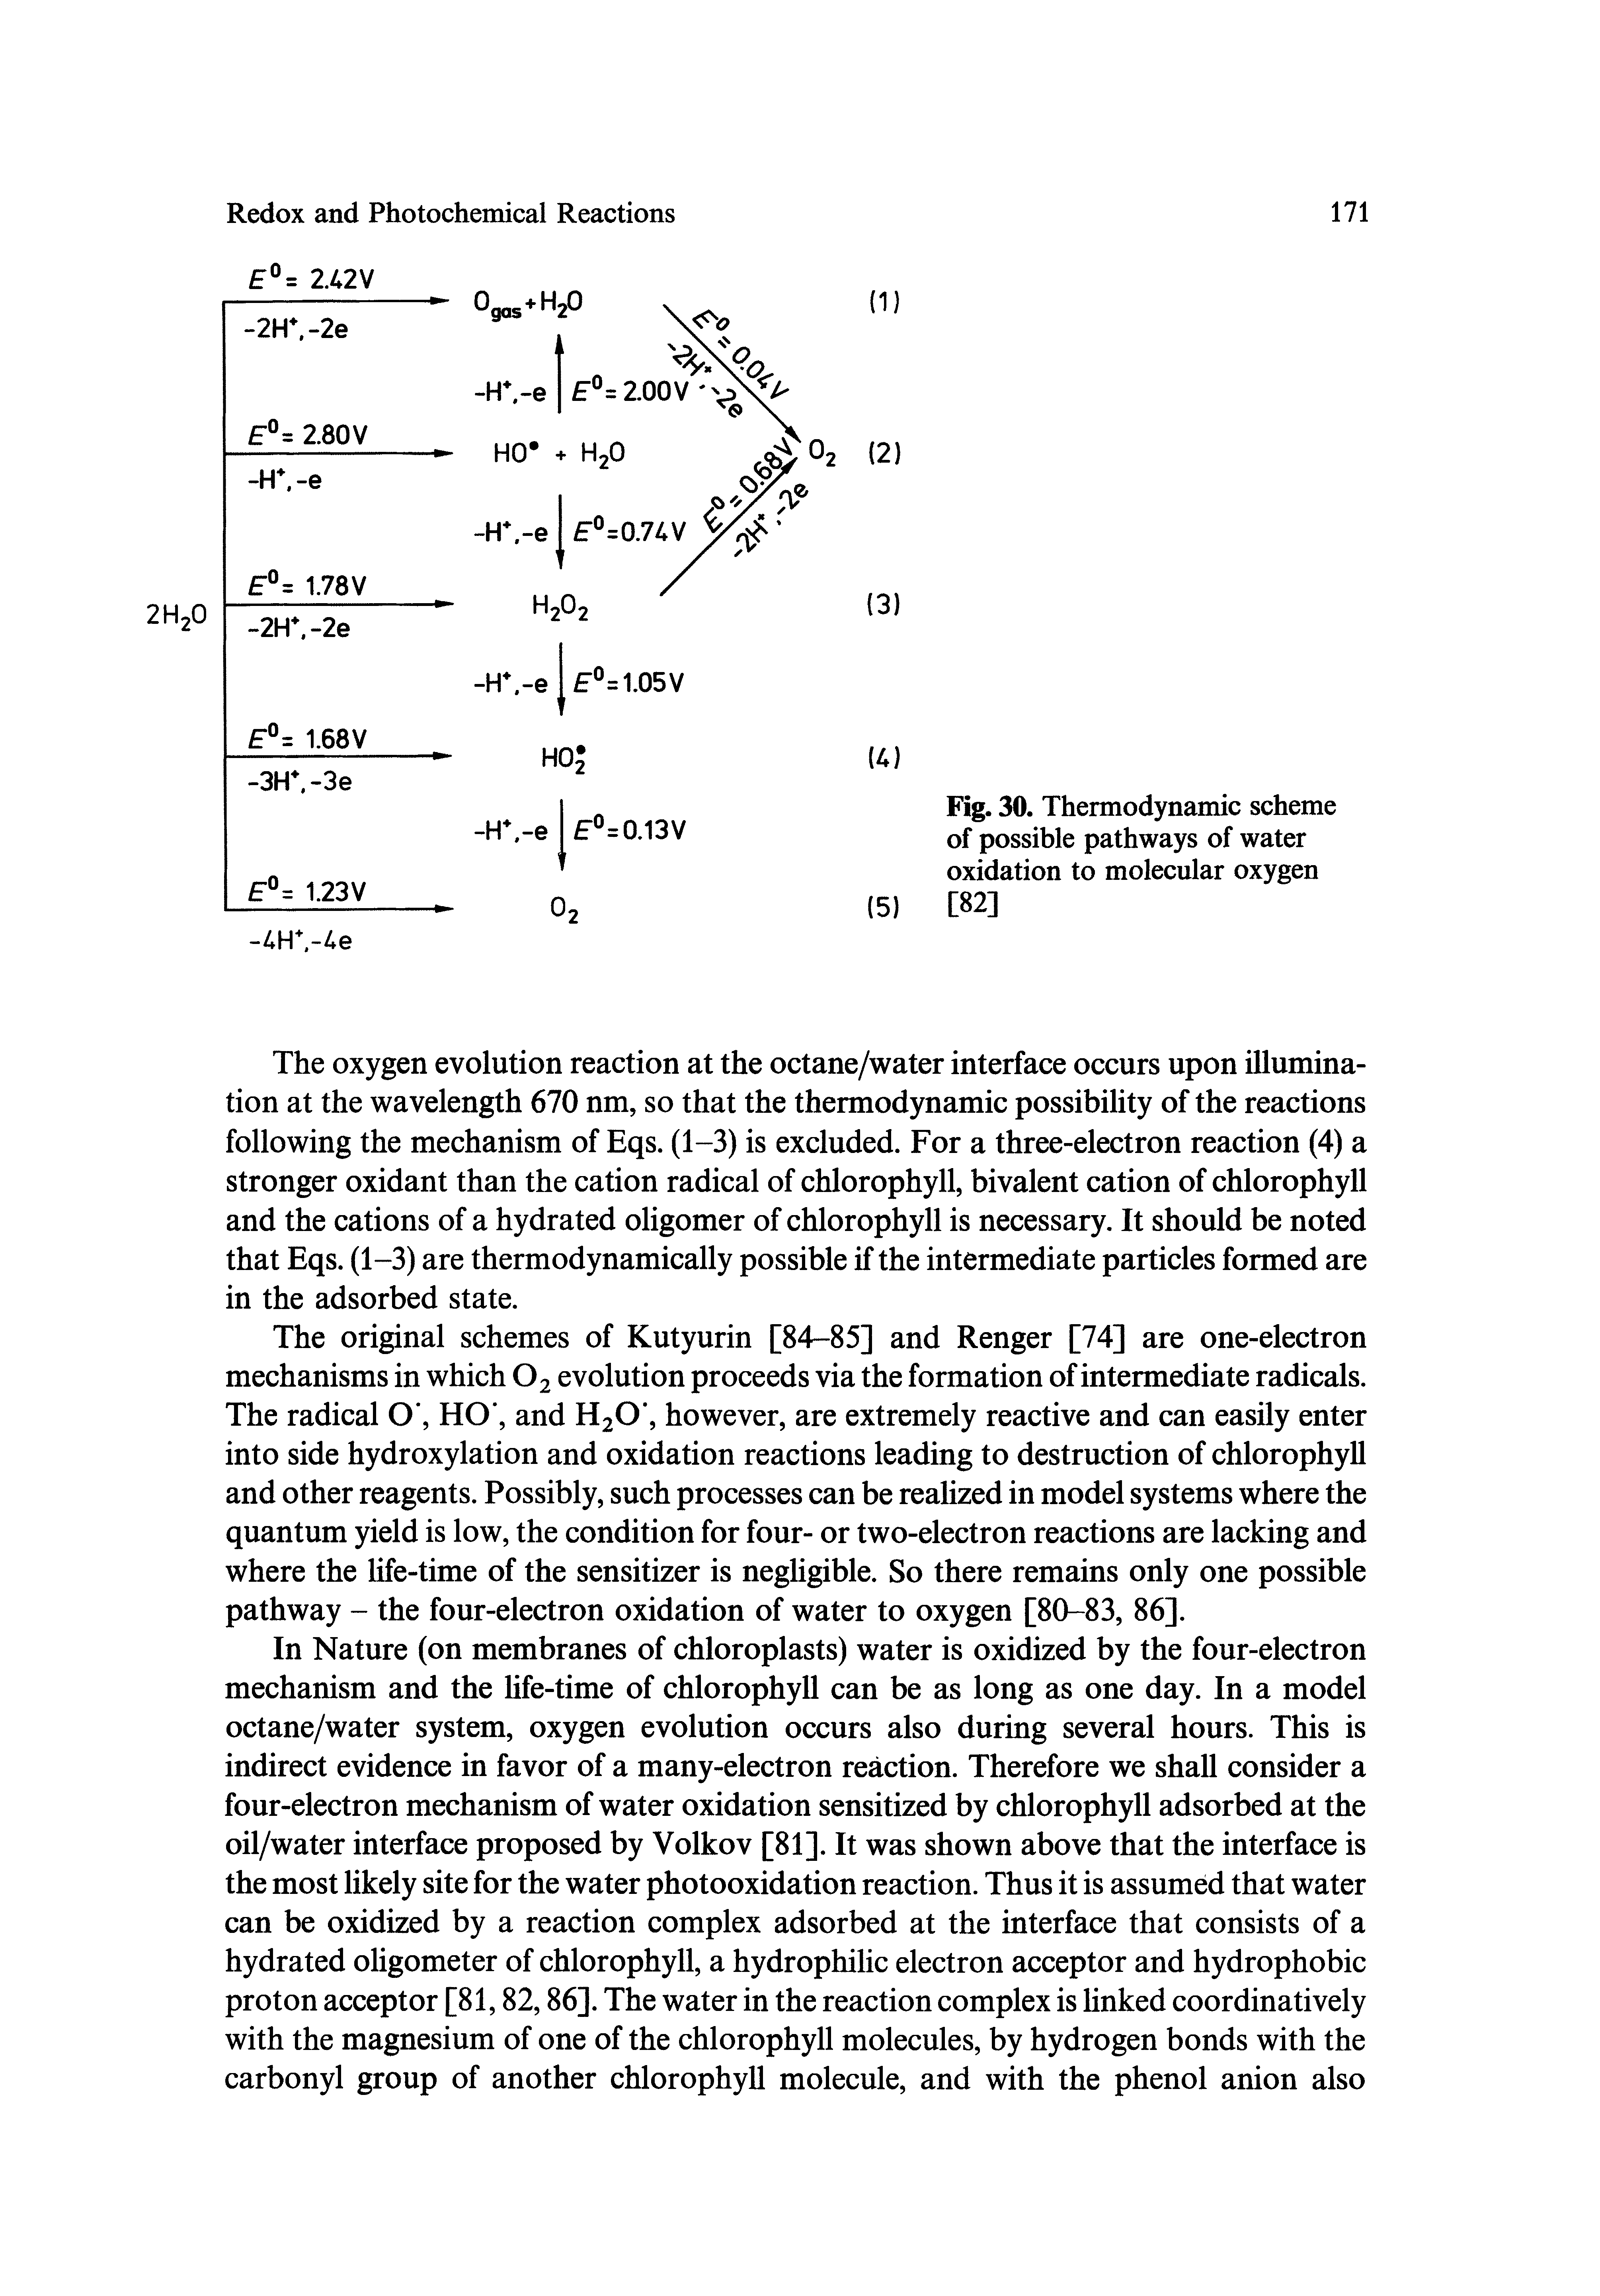 Fig. 30. Thermodynamic scheme of possible pathways of water oxidation to molecular oxygen (5) [82]...